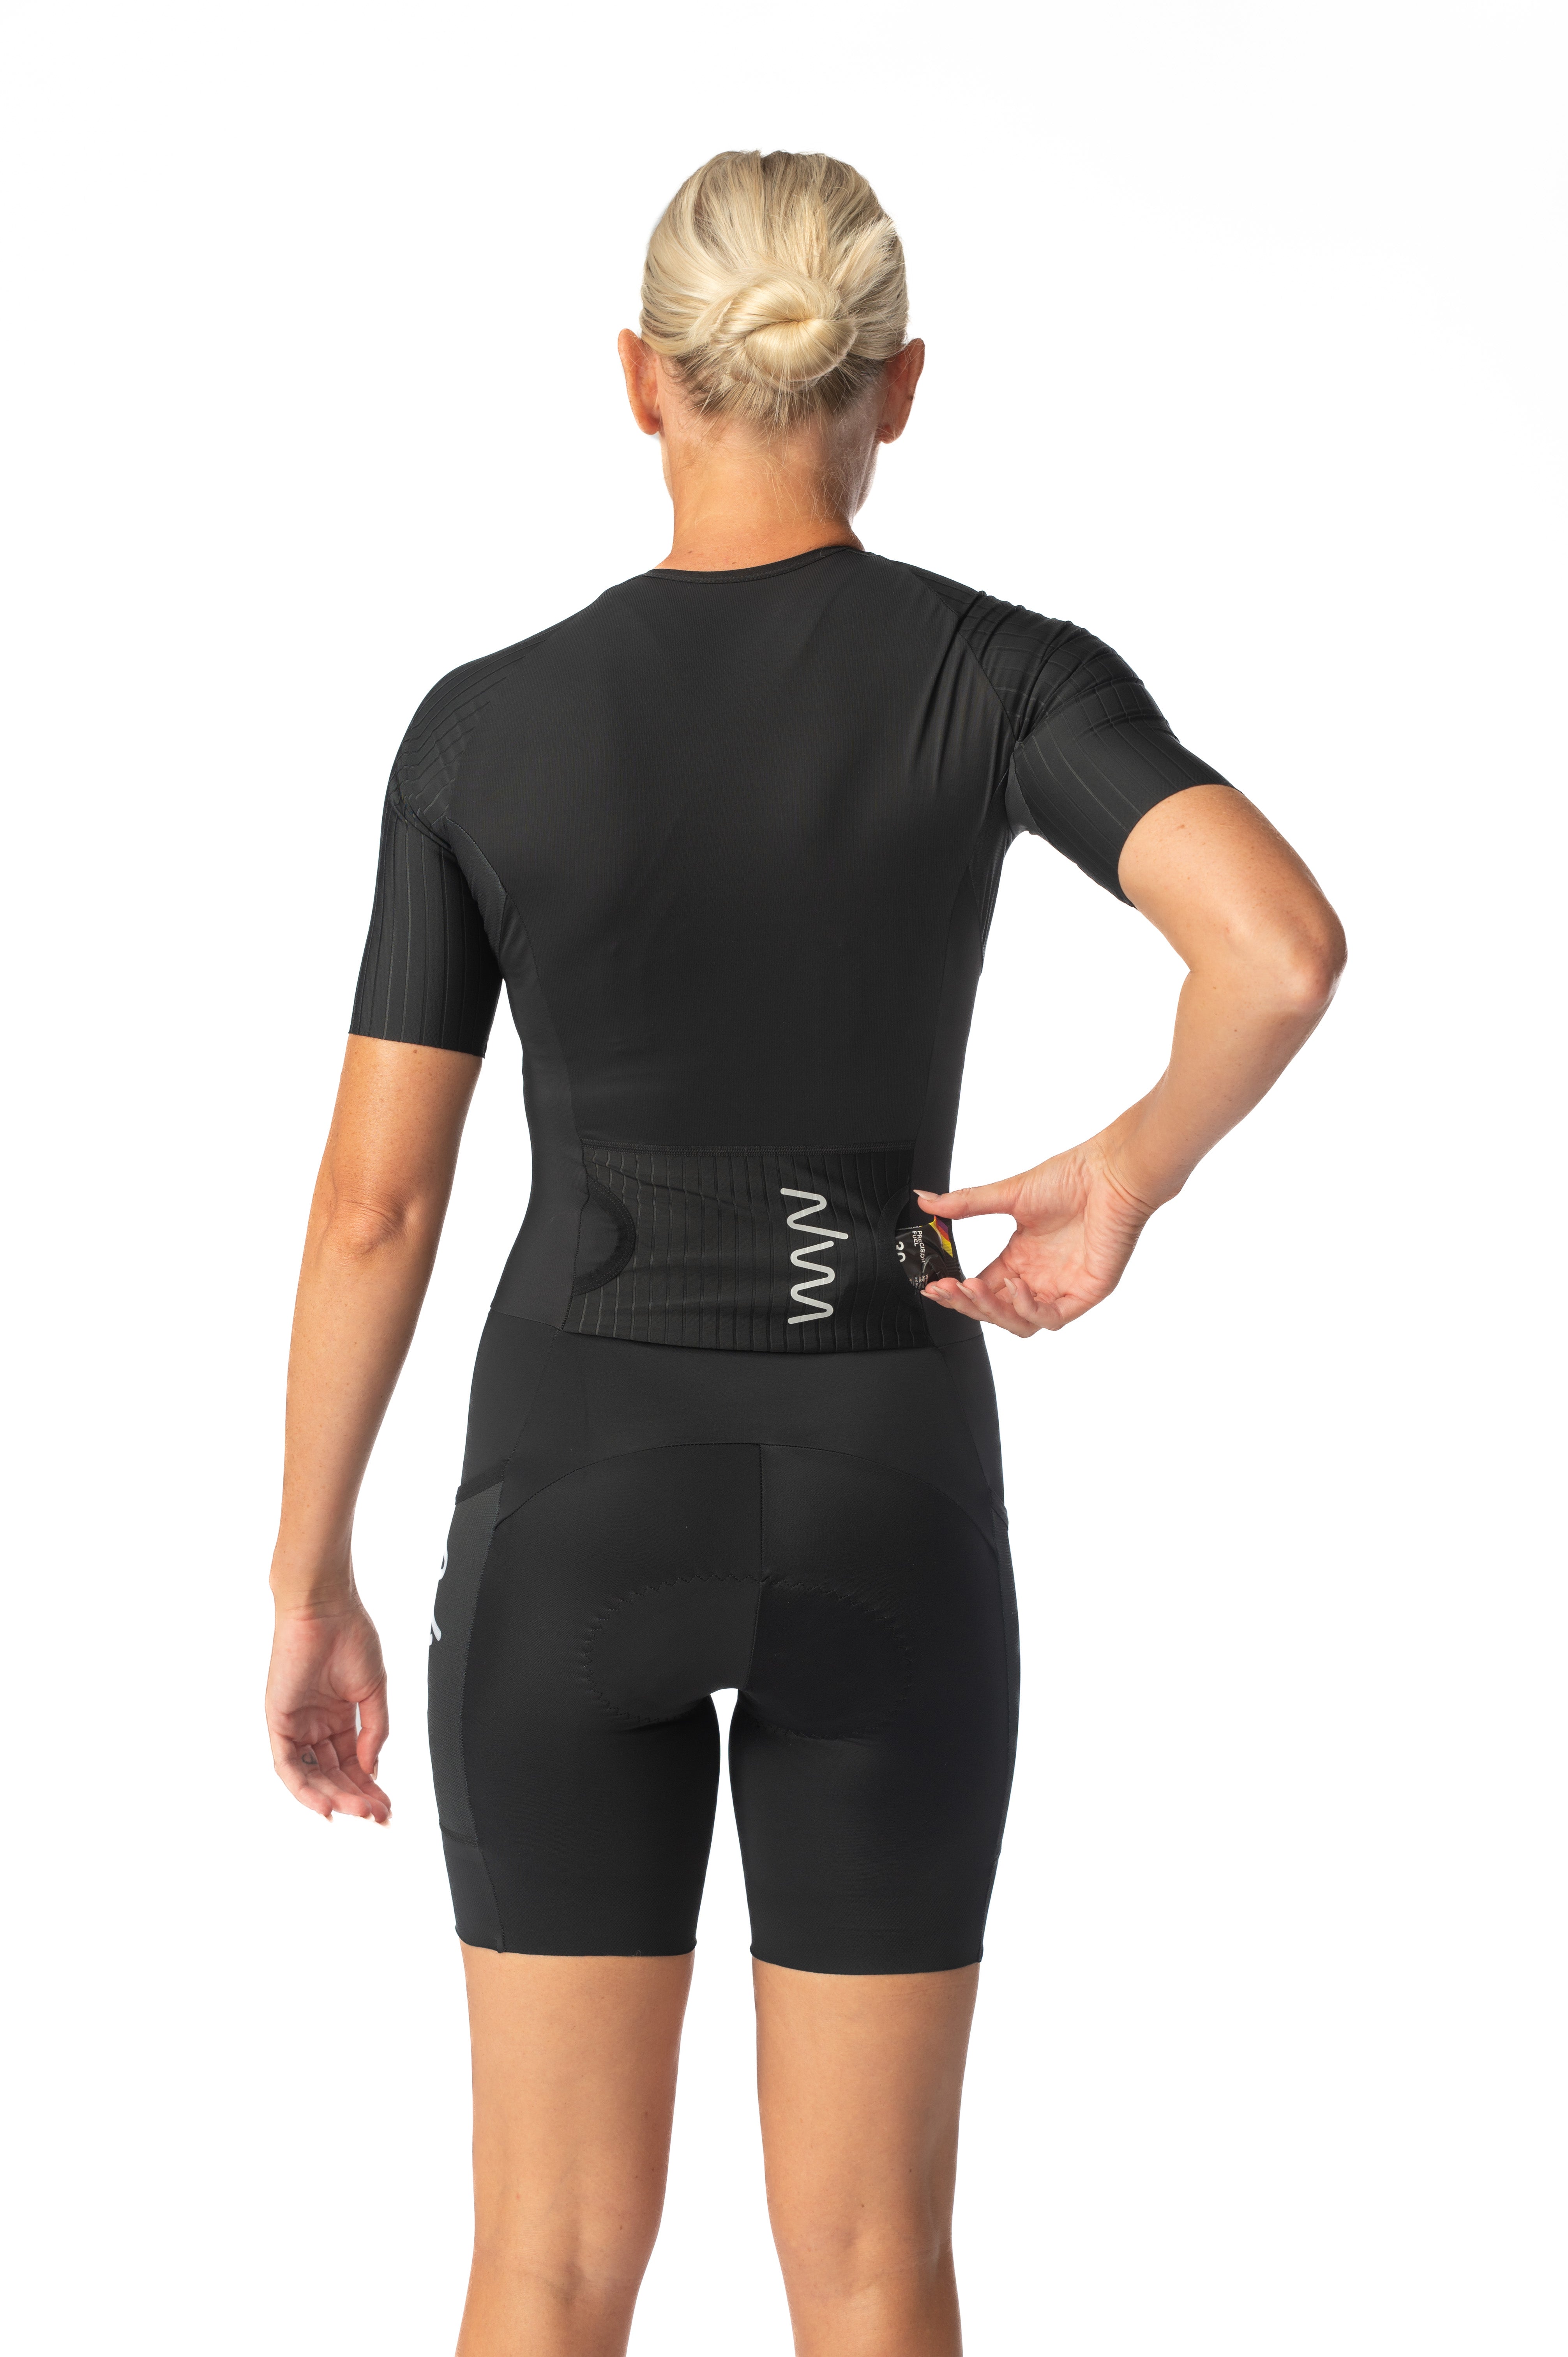 Women's Hi Velocity X Triathlon Suit - Black